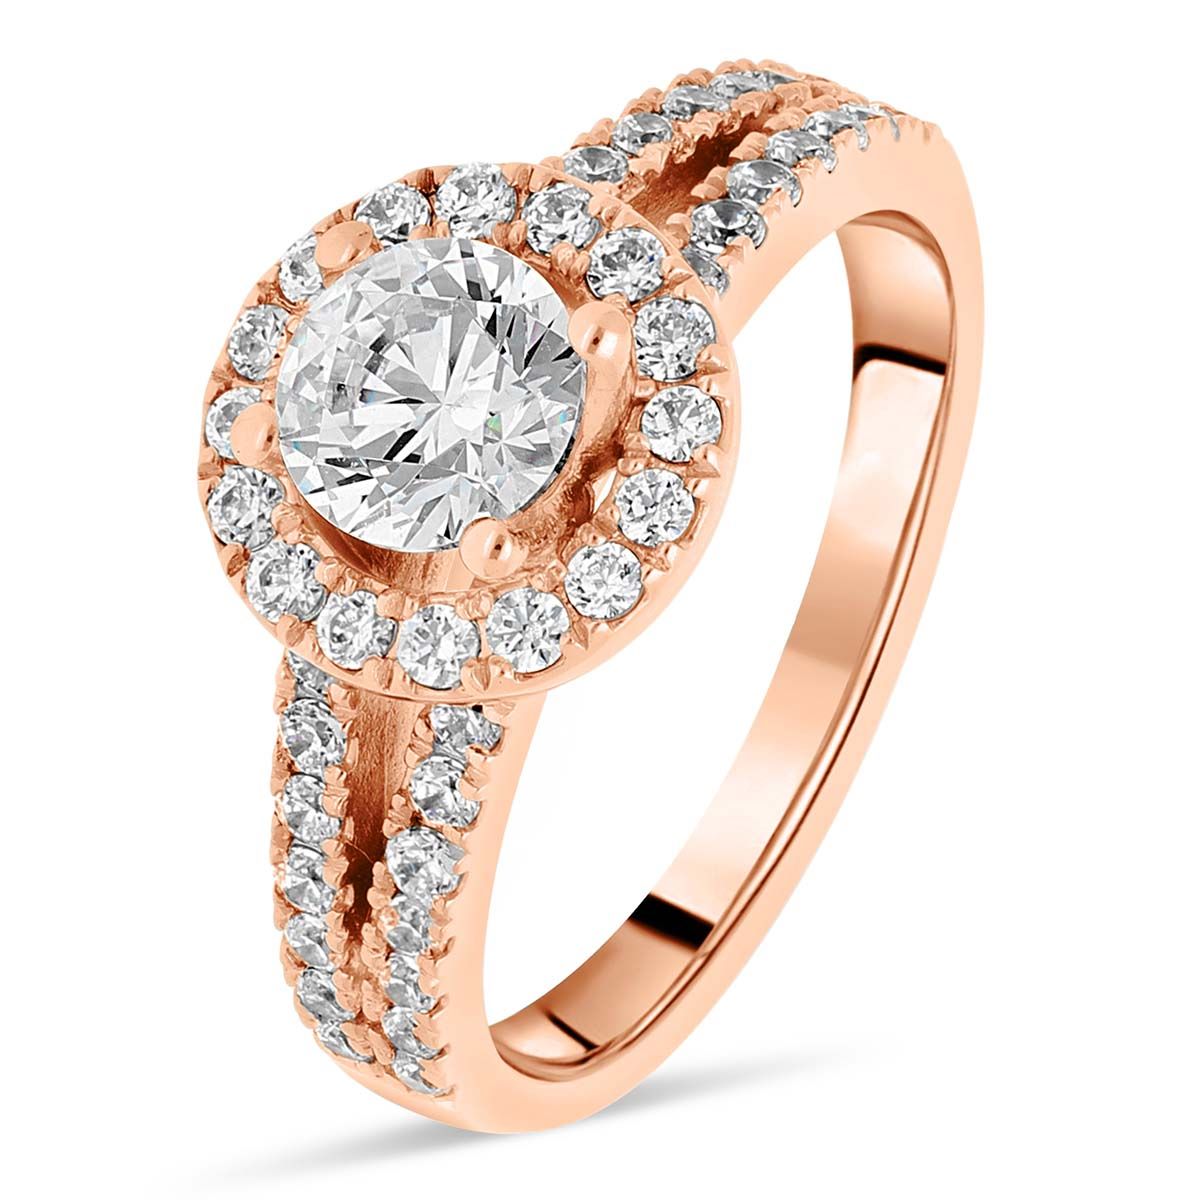 caiman-r-solitaires-diamants-certifies-entourage-or-rose-750-